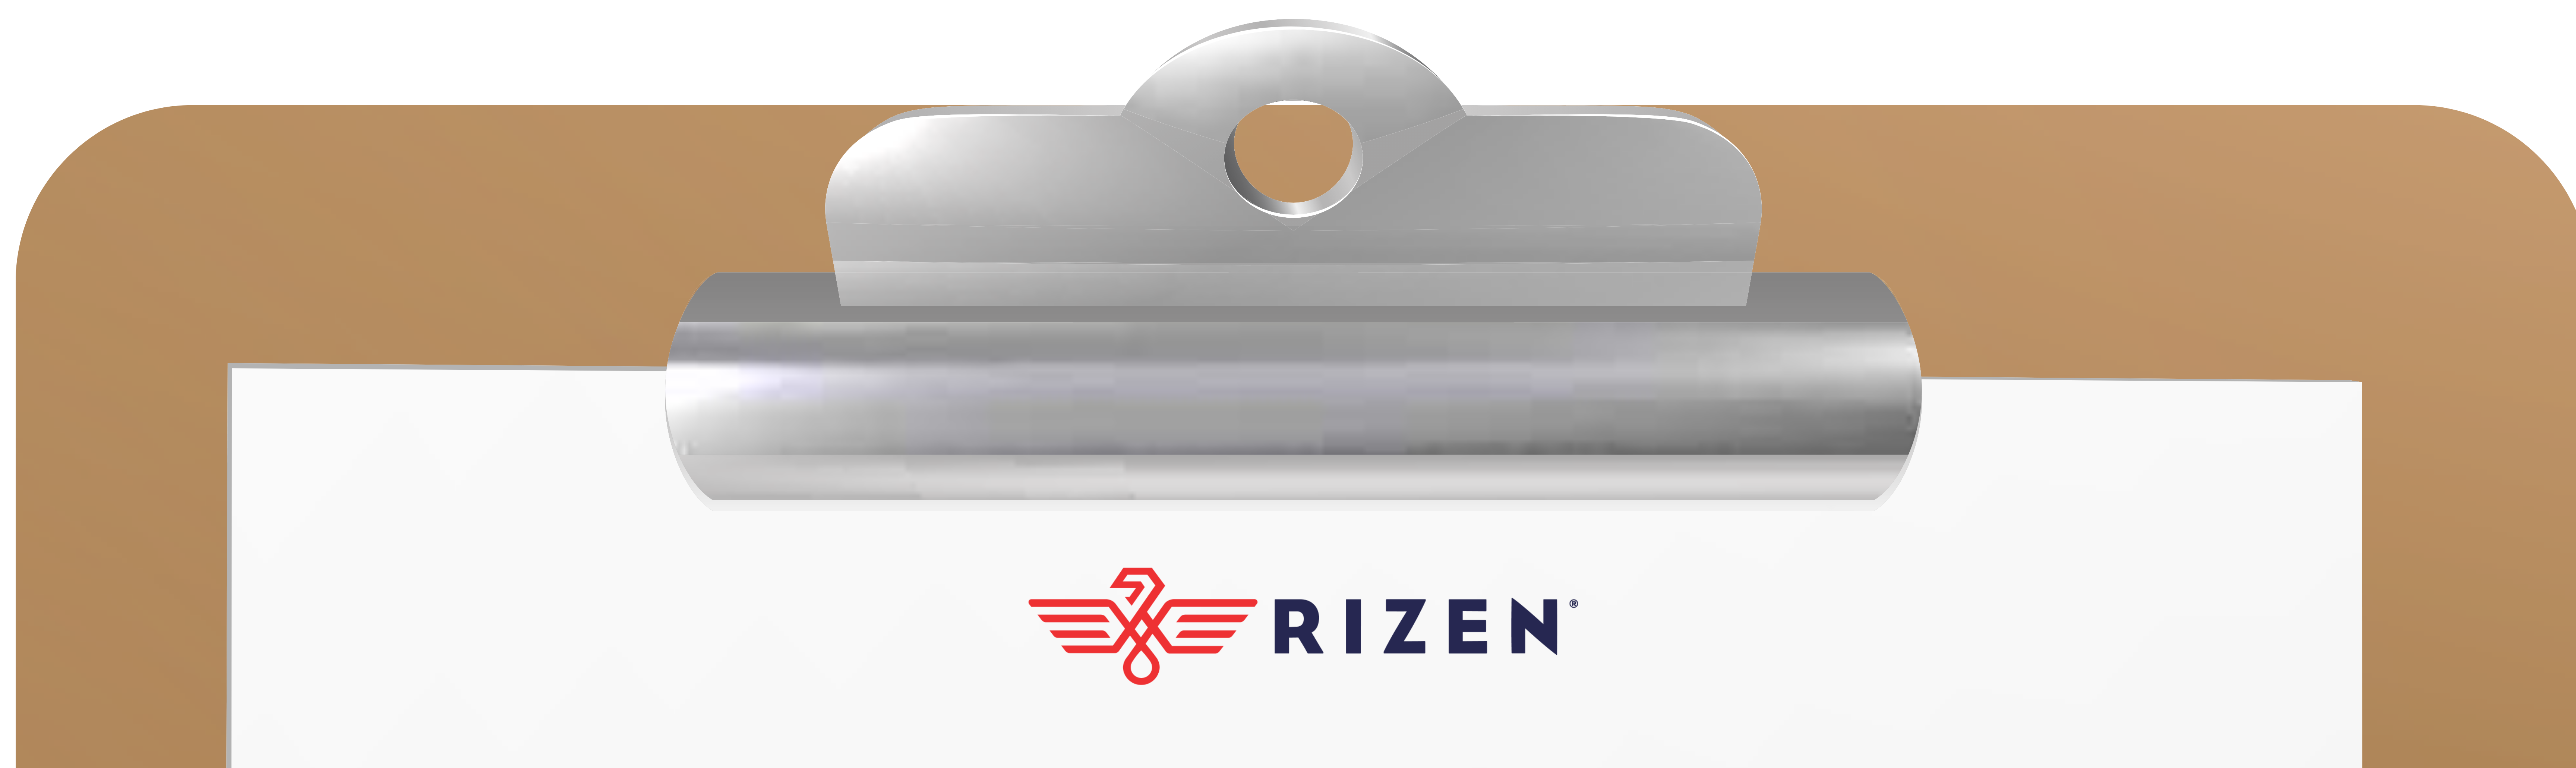 Rizen home services clipboard